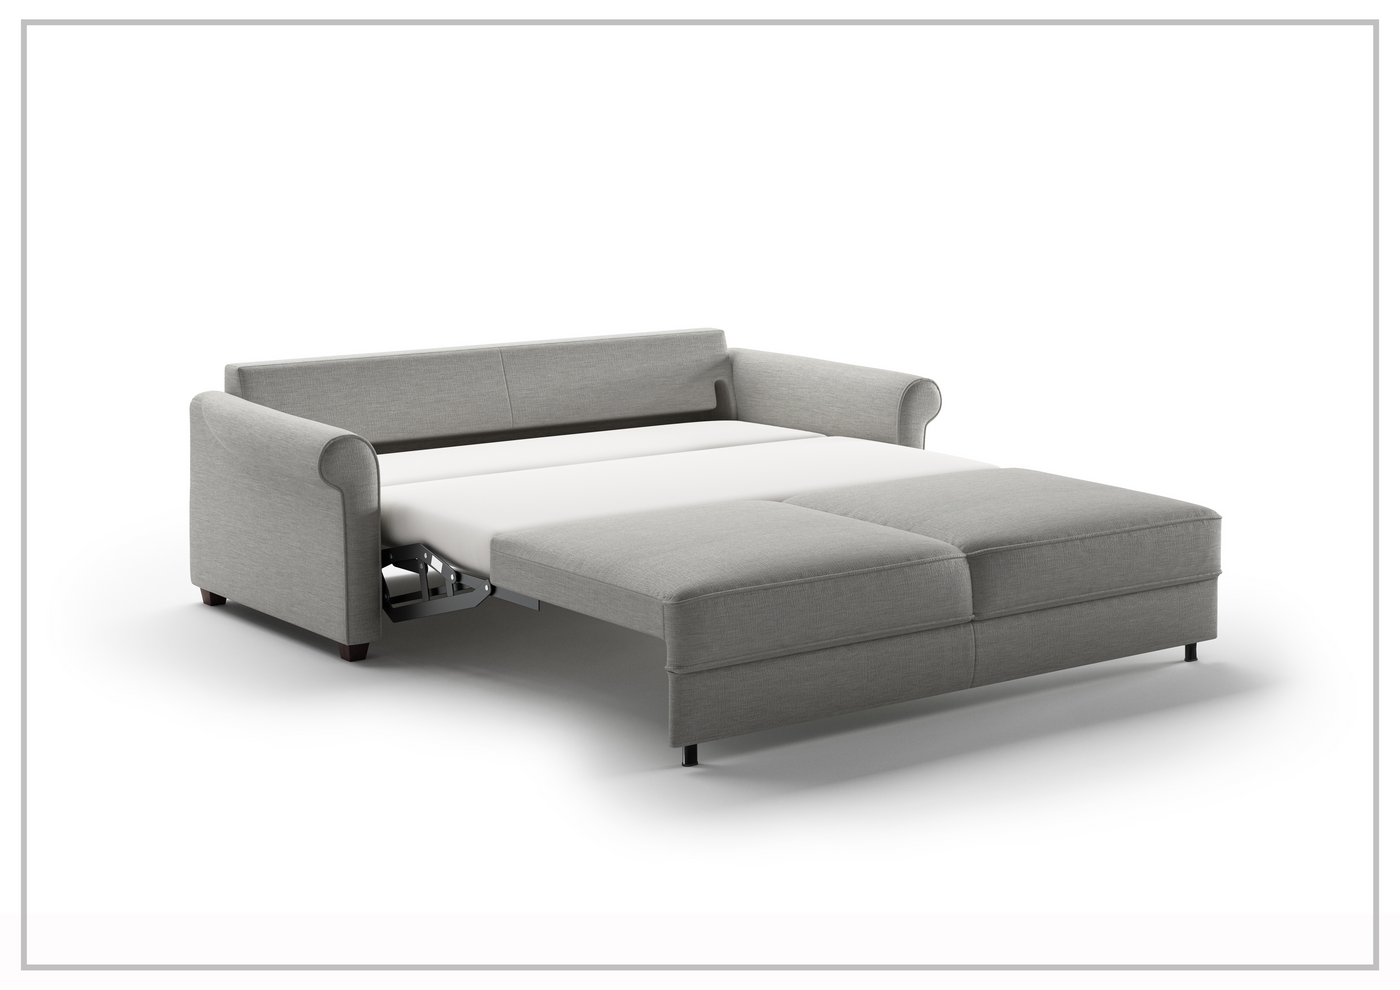 Charleston Gray Sleeper Sofa with Level Function